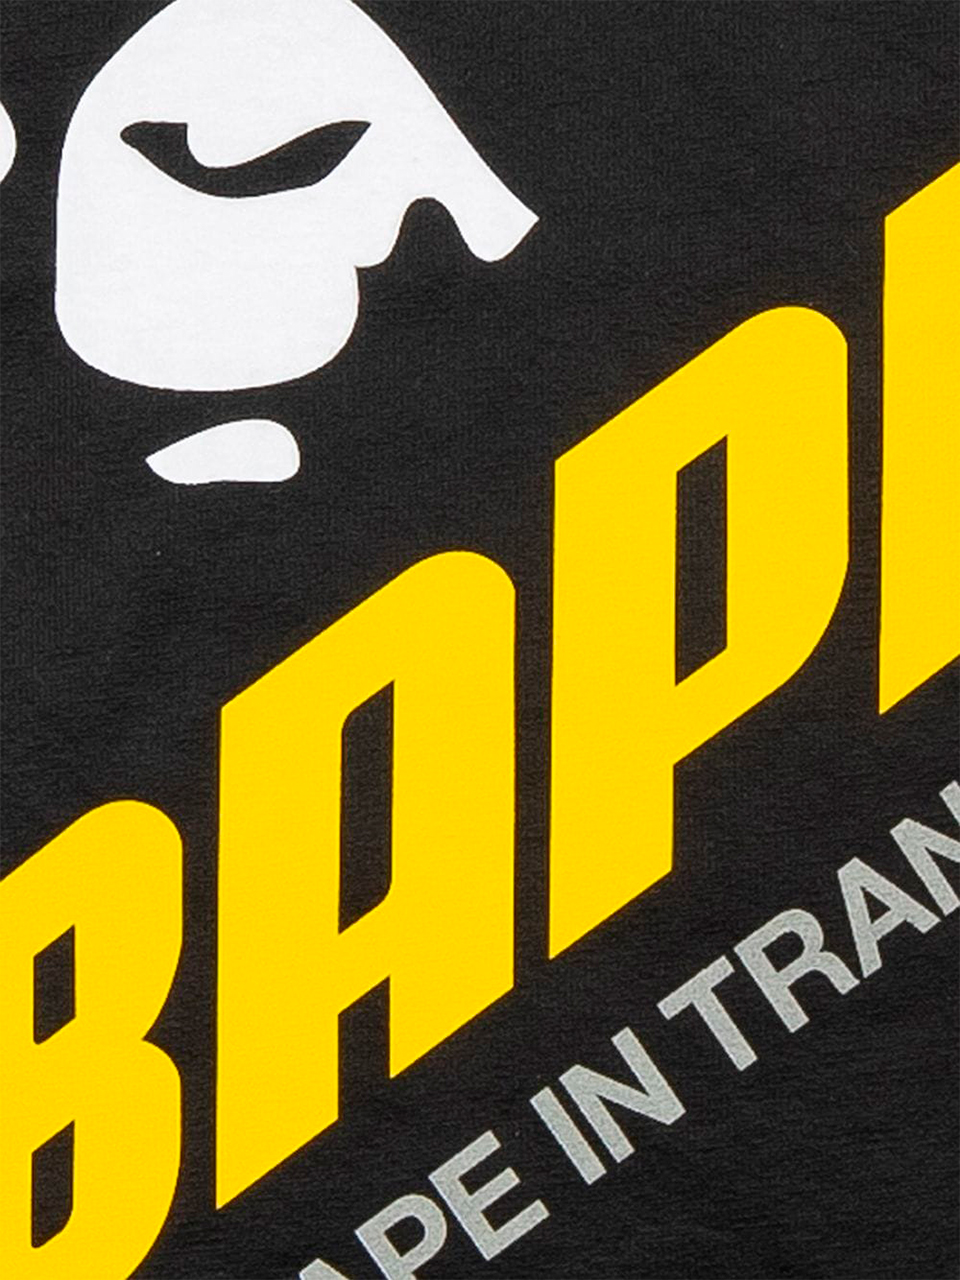 Imagem de: Camiseta BAPE In Transit com Logo